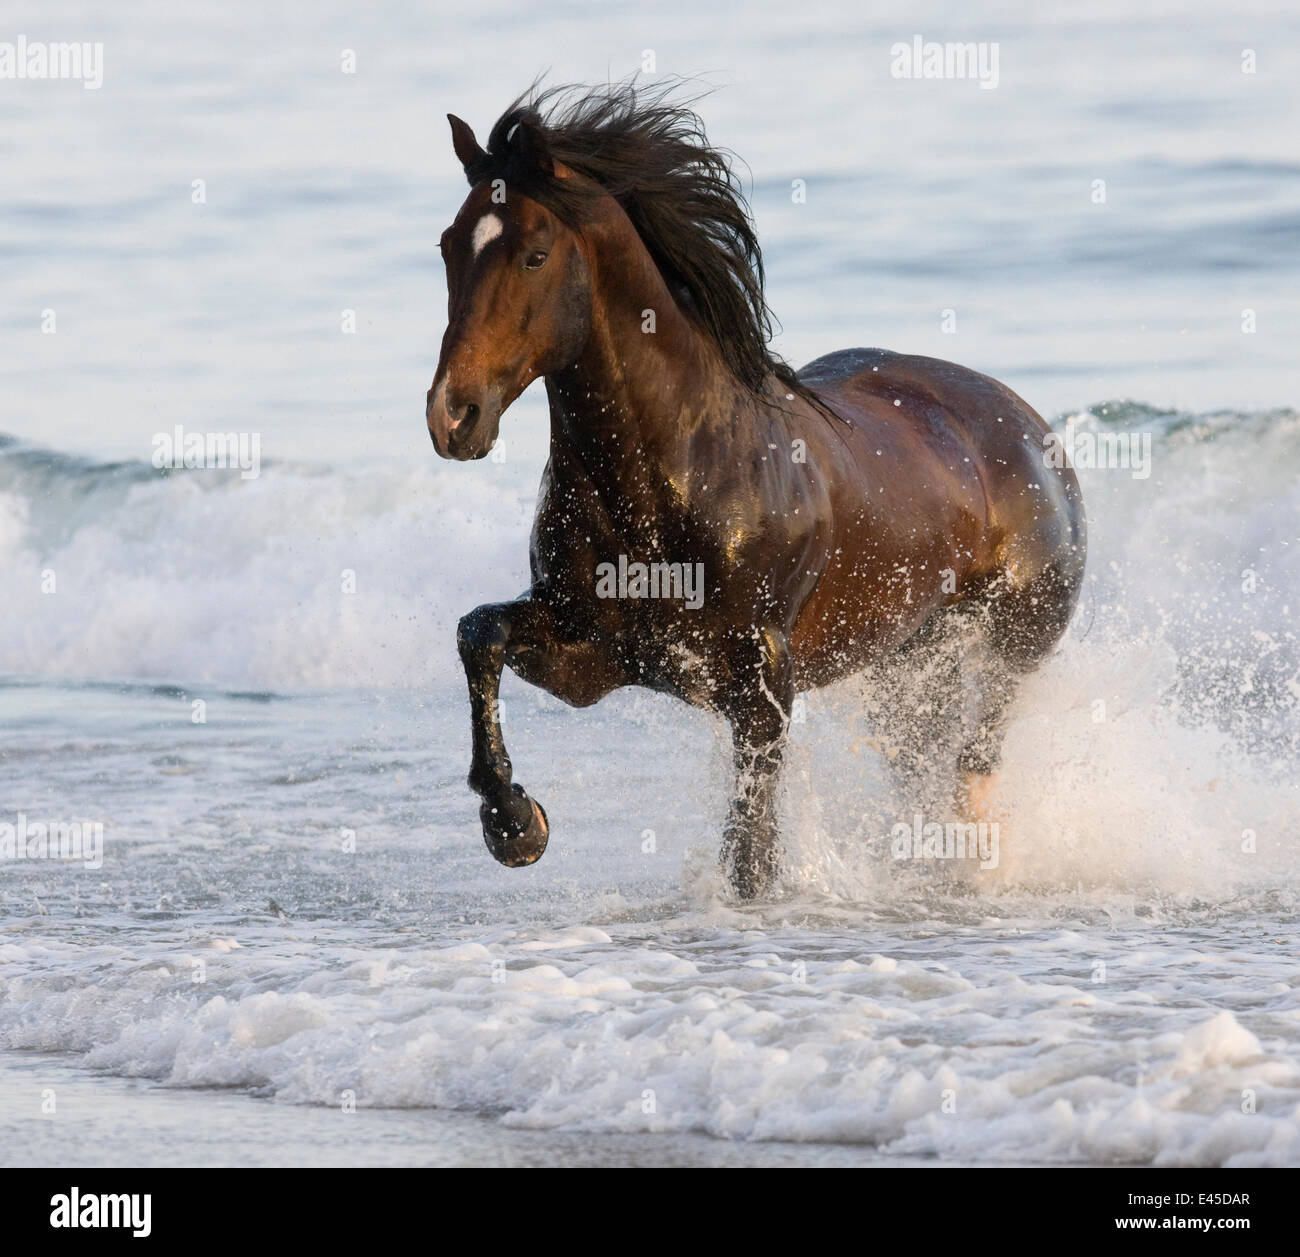 Bay Azteca stallion (Andalusian and Quarter Horse cross) trotting onto beach from waves, Summerland Beach, Ojai, California, USA Stock Photo